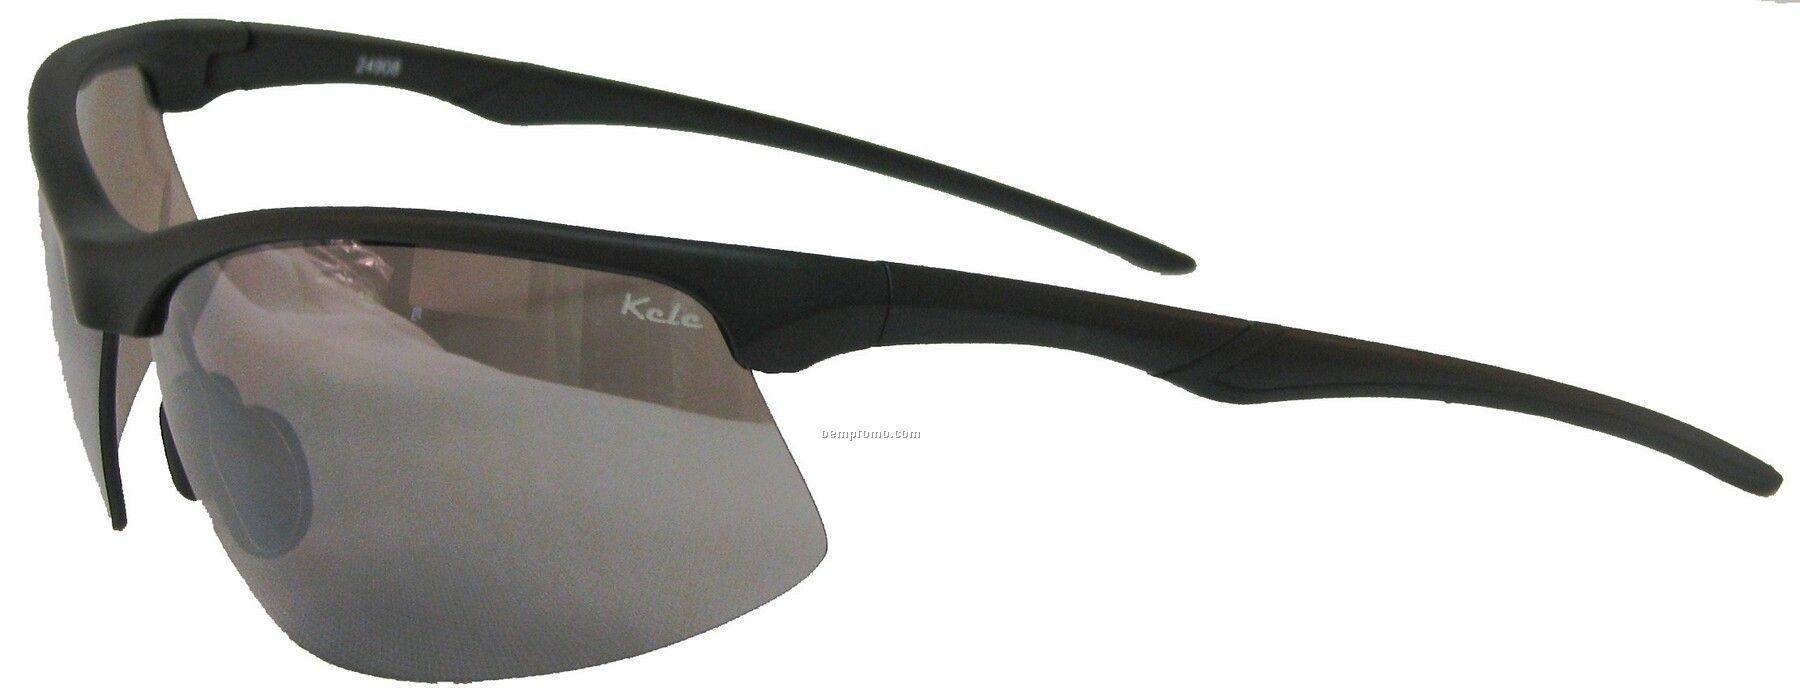 Wave Sunglasses - Gray Lens W/Matte Black Frame